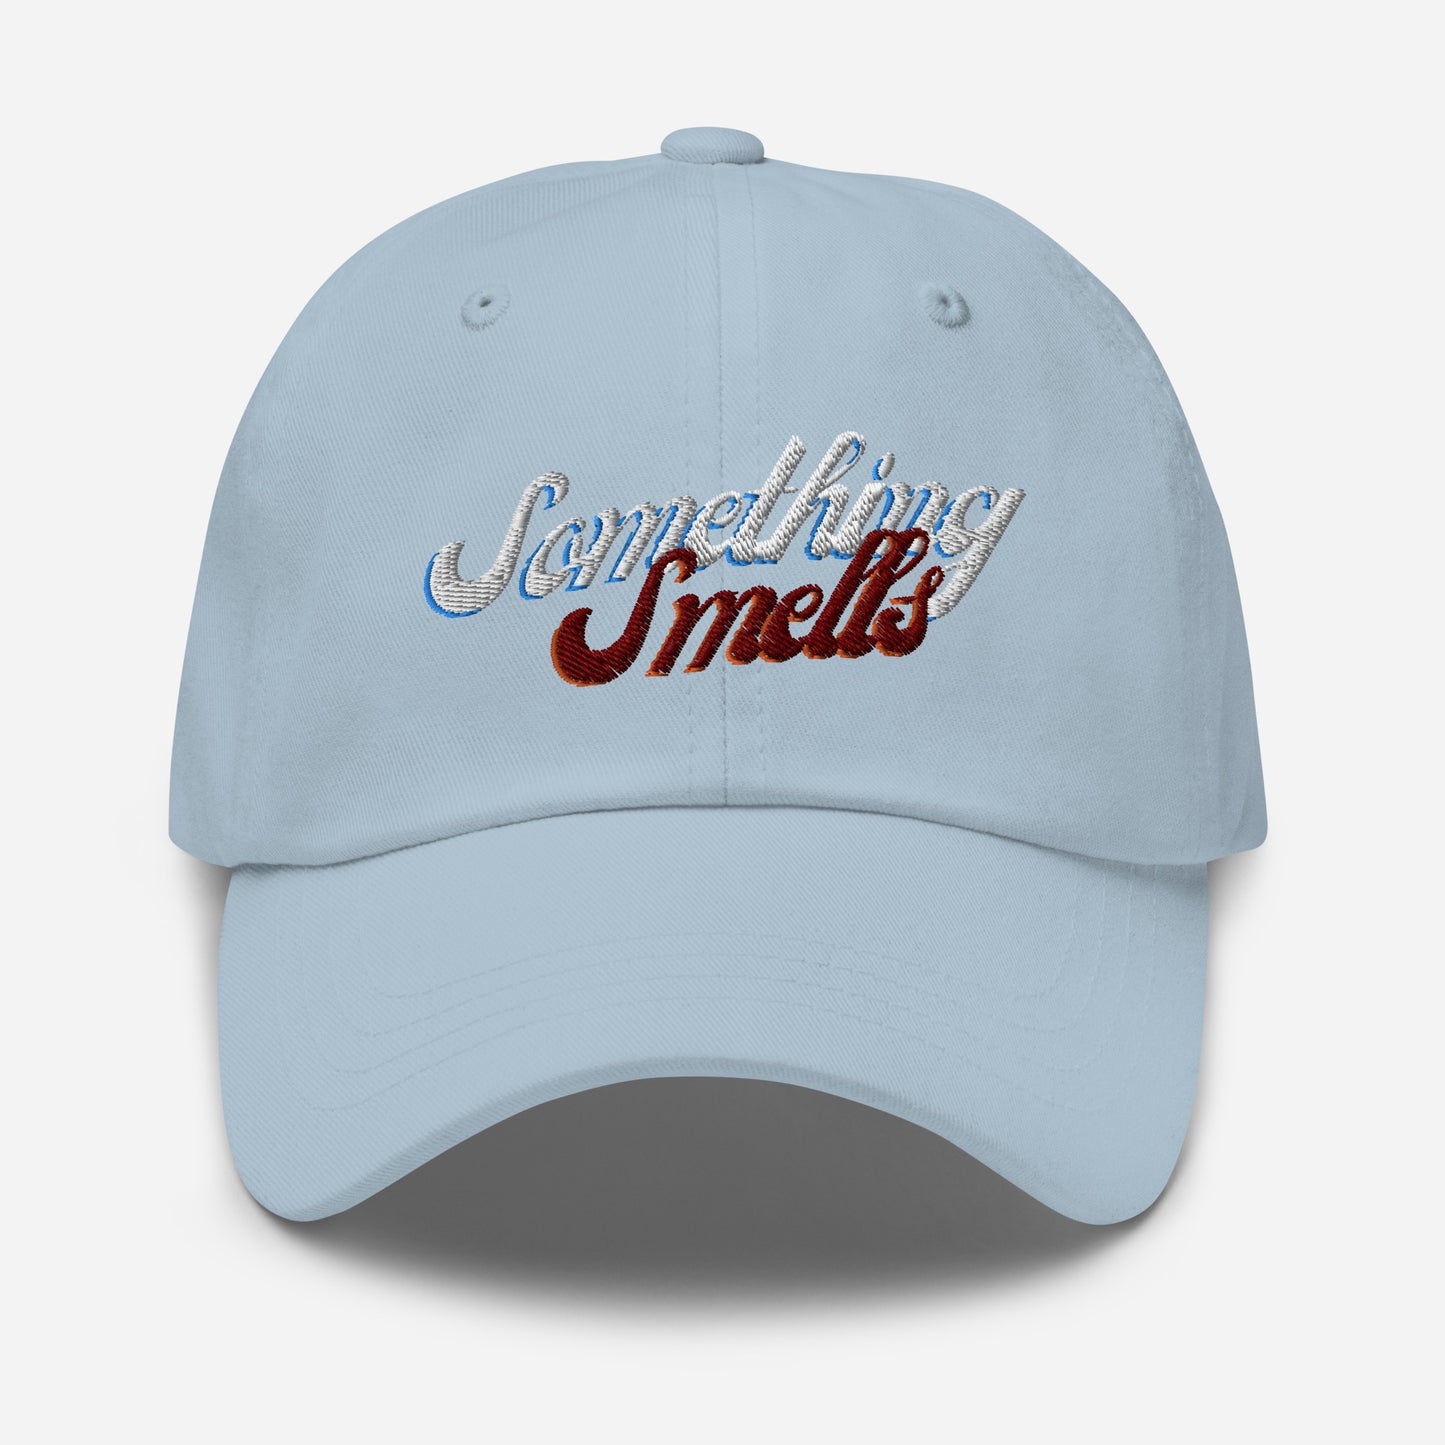 Something Smells Hat